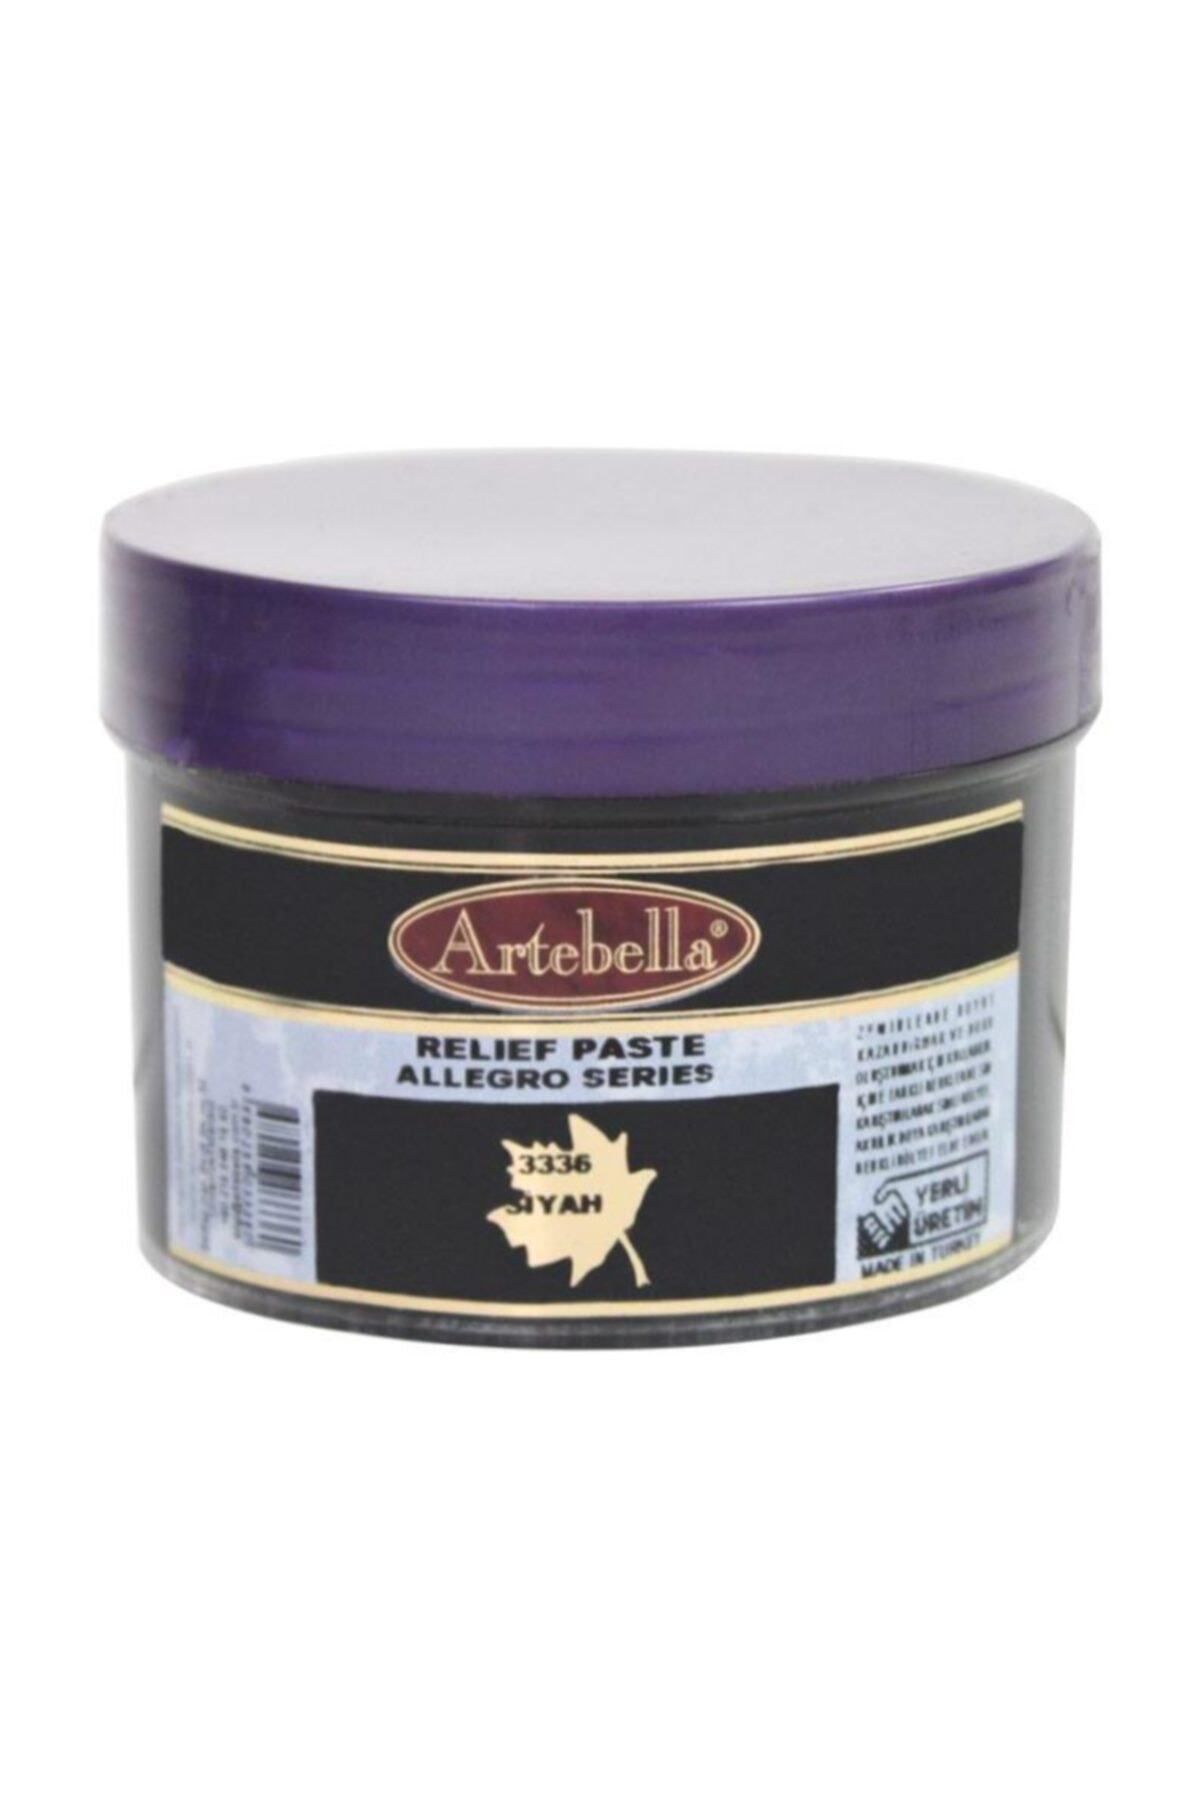 Artebella Allegro Rölyef Pasta Siyah 160ml